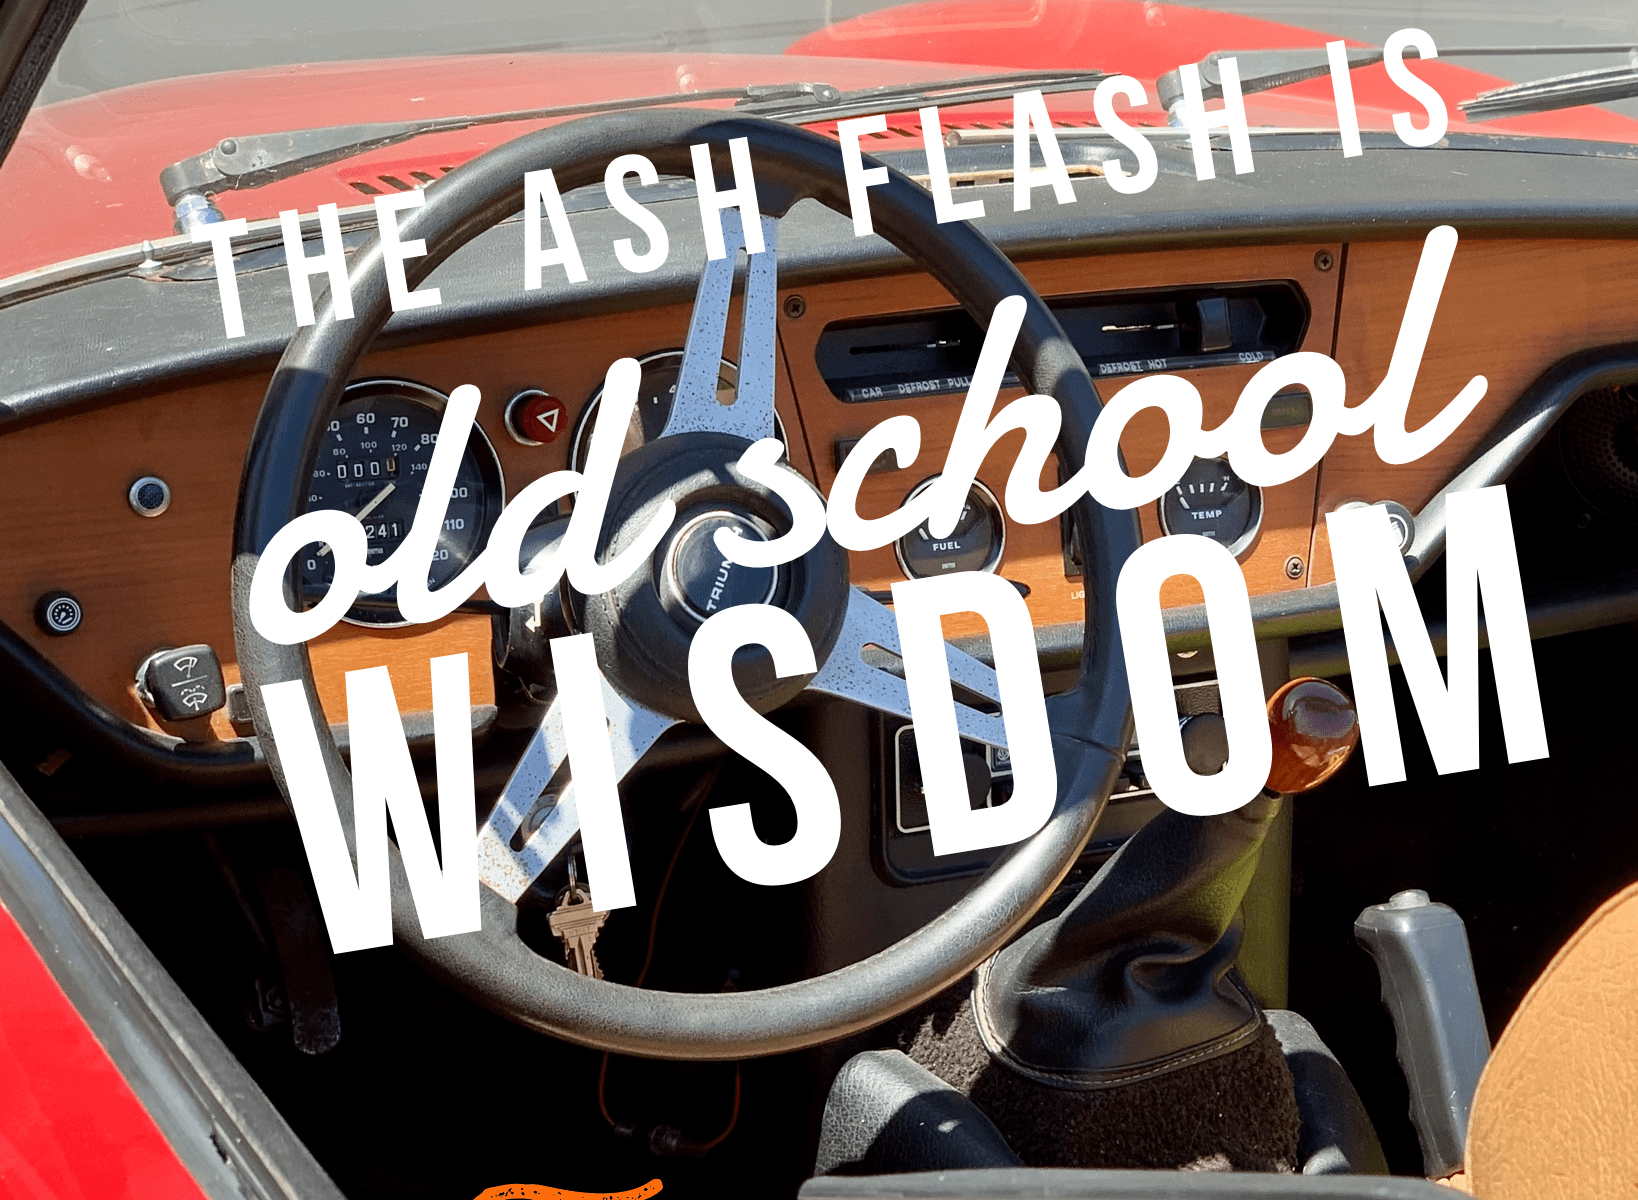 the ash flash is old school wisdom